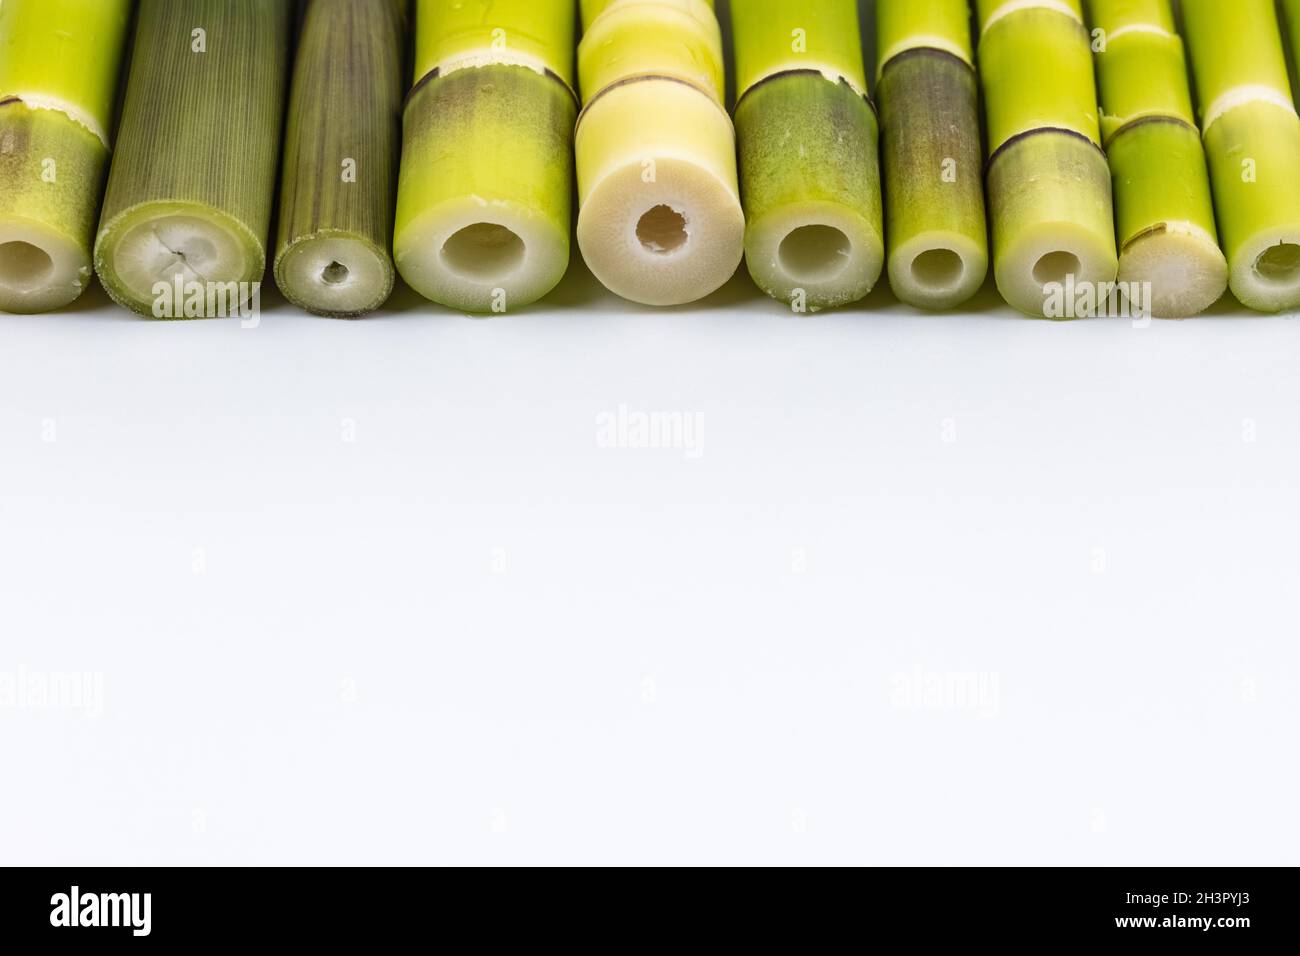 Fresh little bamboo shoots isolated Stock Photo